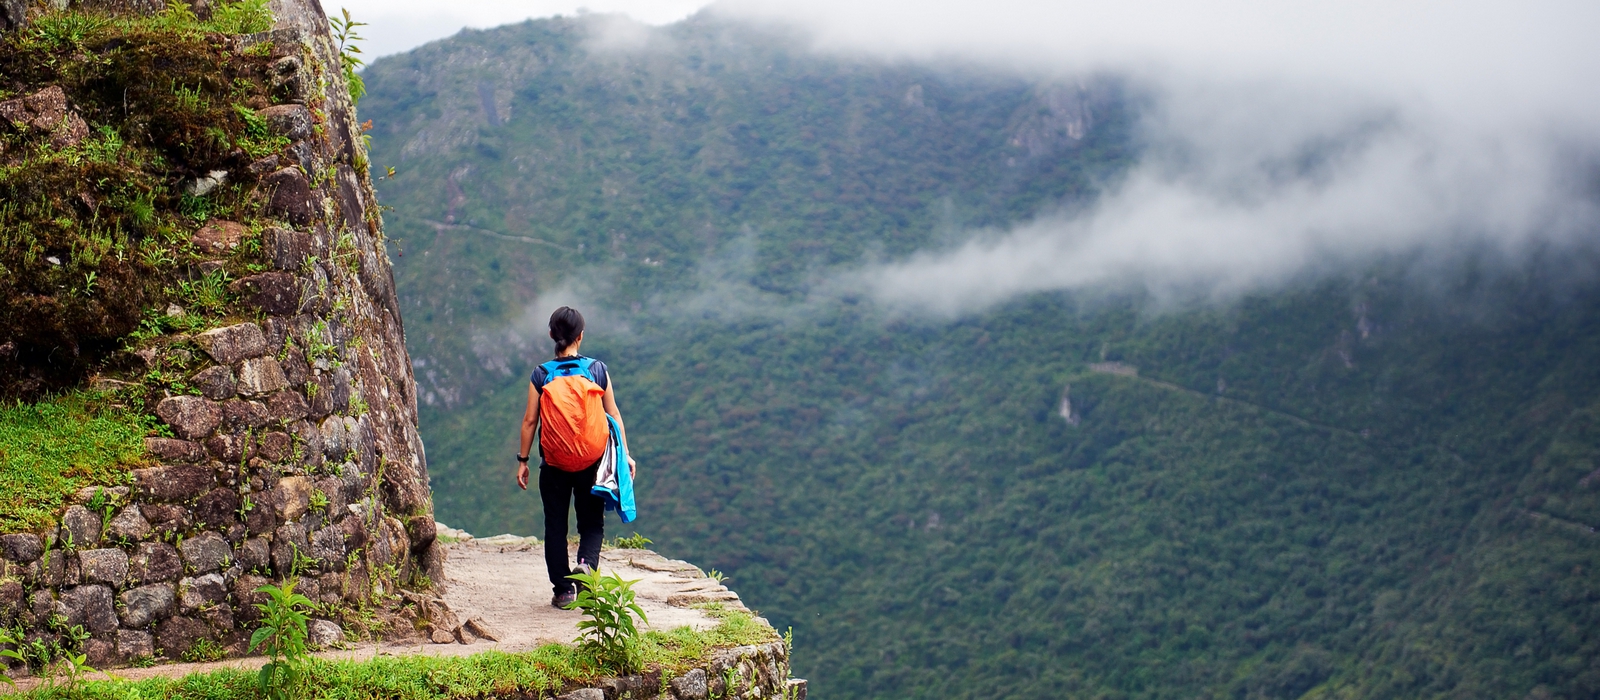 Salkantay Trek and Inca Trail to Machu Picchu